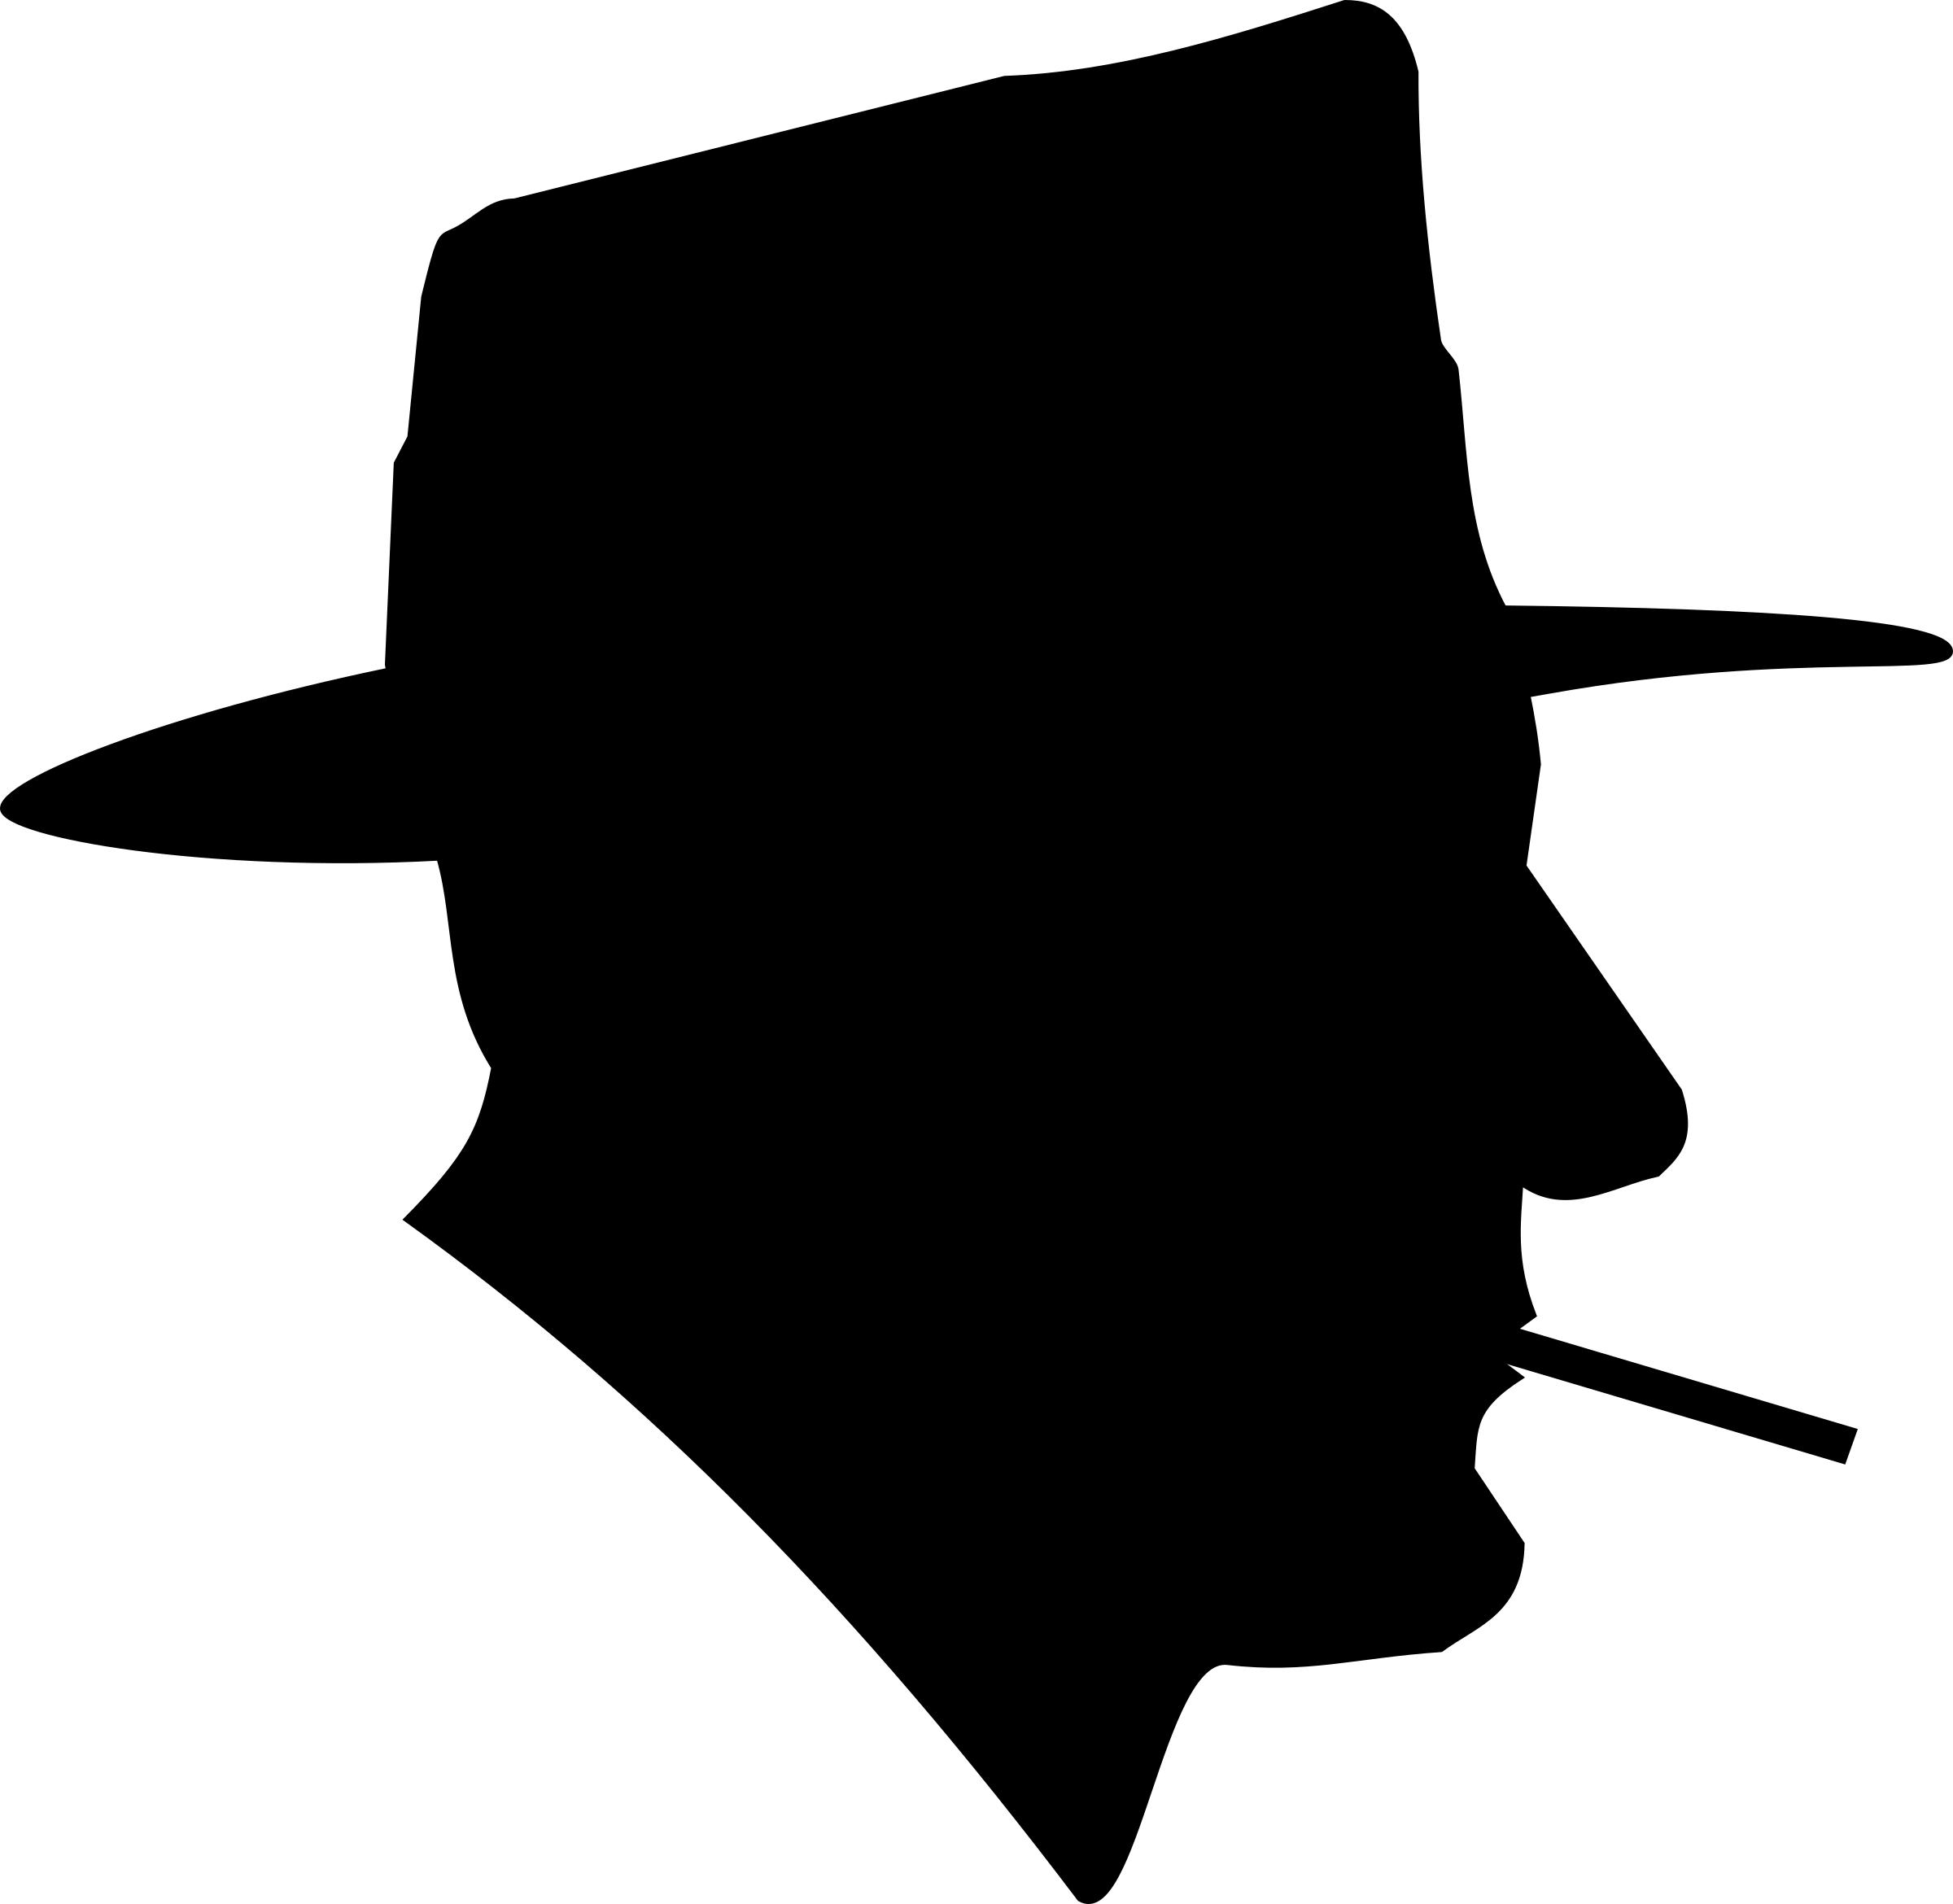 Smoking Man in Fedora Silhouette PNG icons